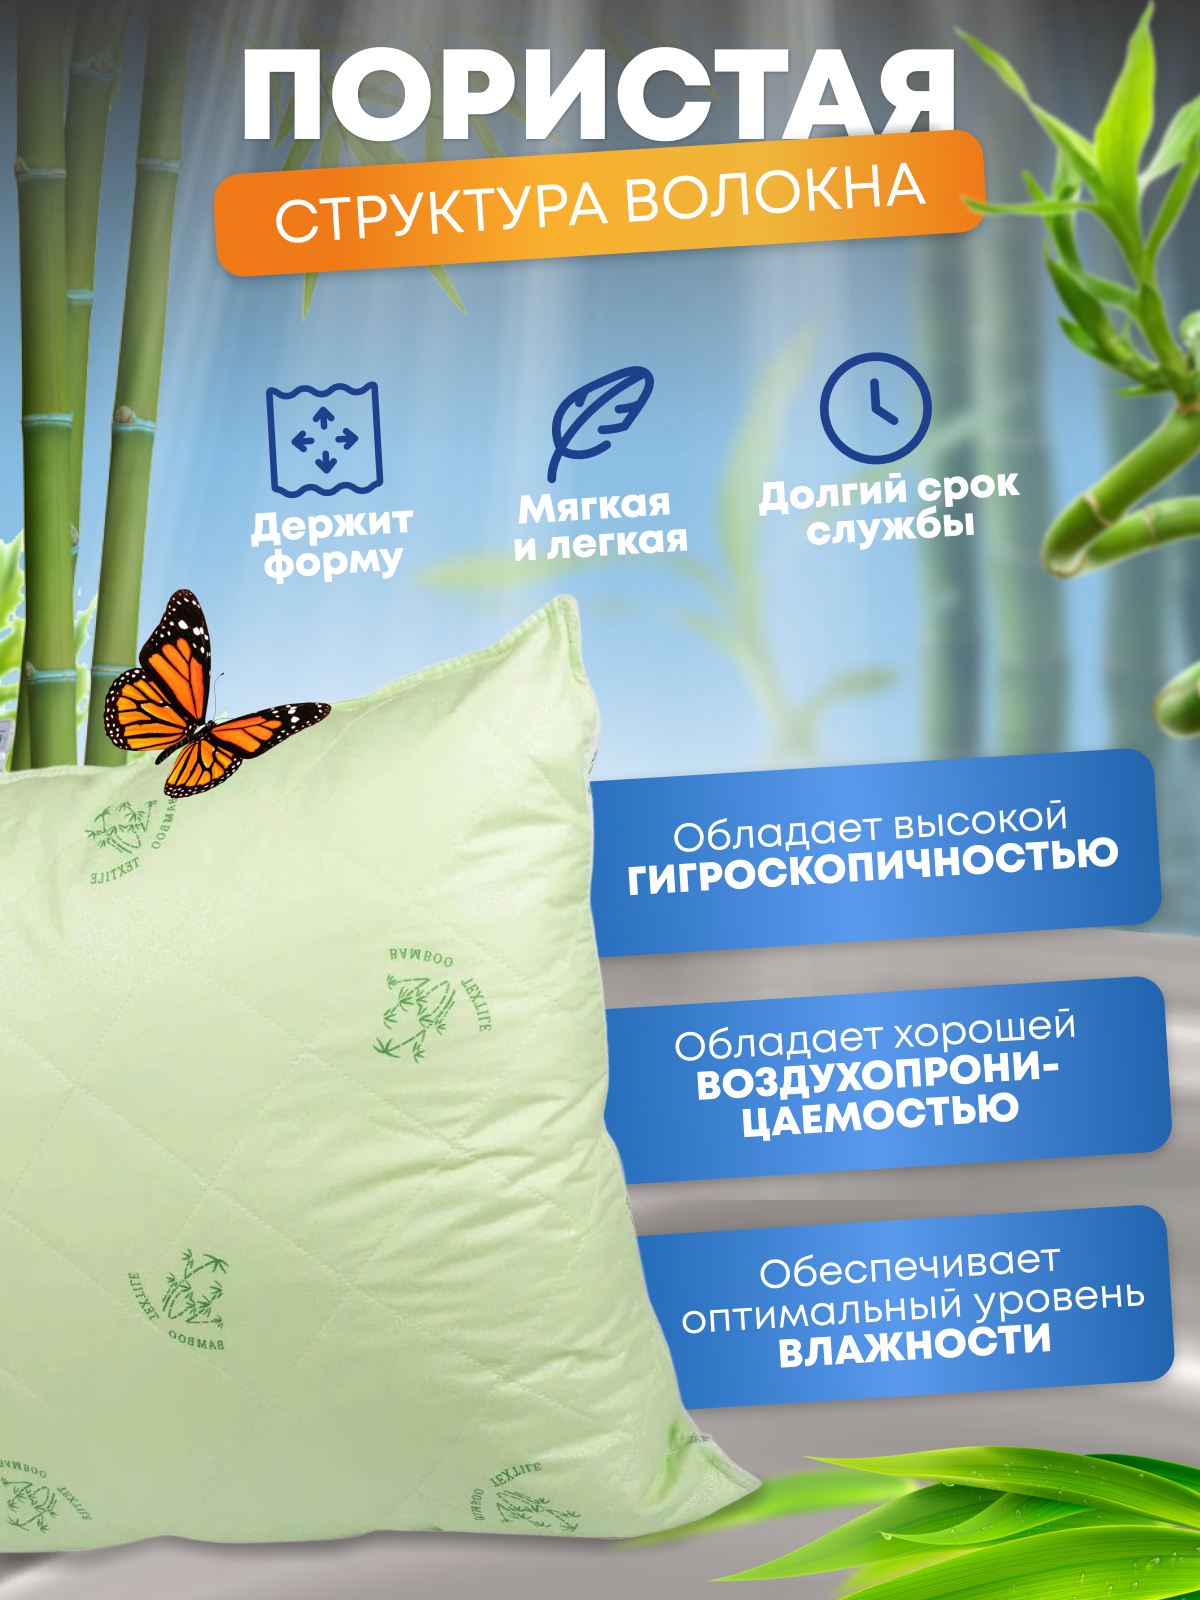 Подушка 70х70 для сна мягкая упругая гипоаллергенная бамбук - фотография № 2